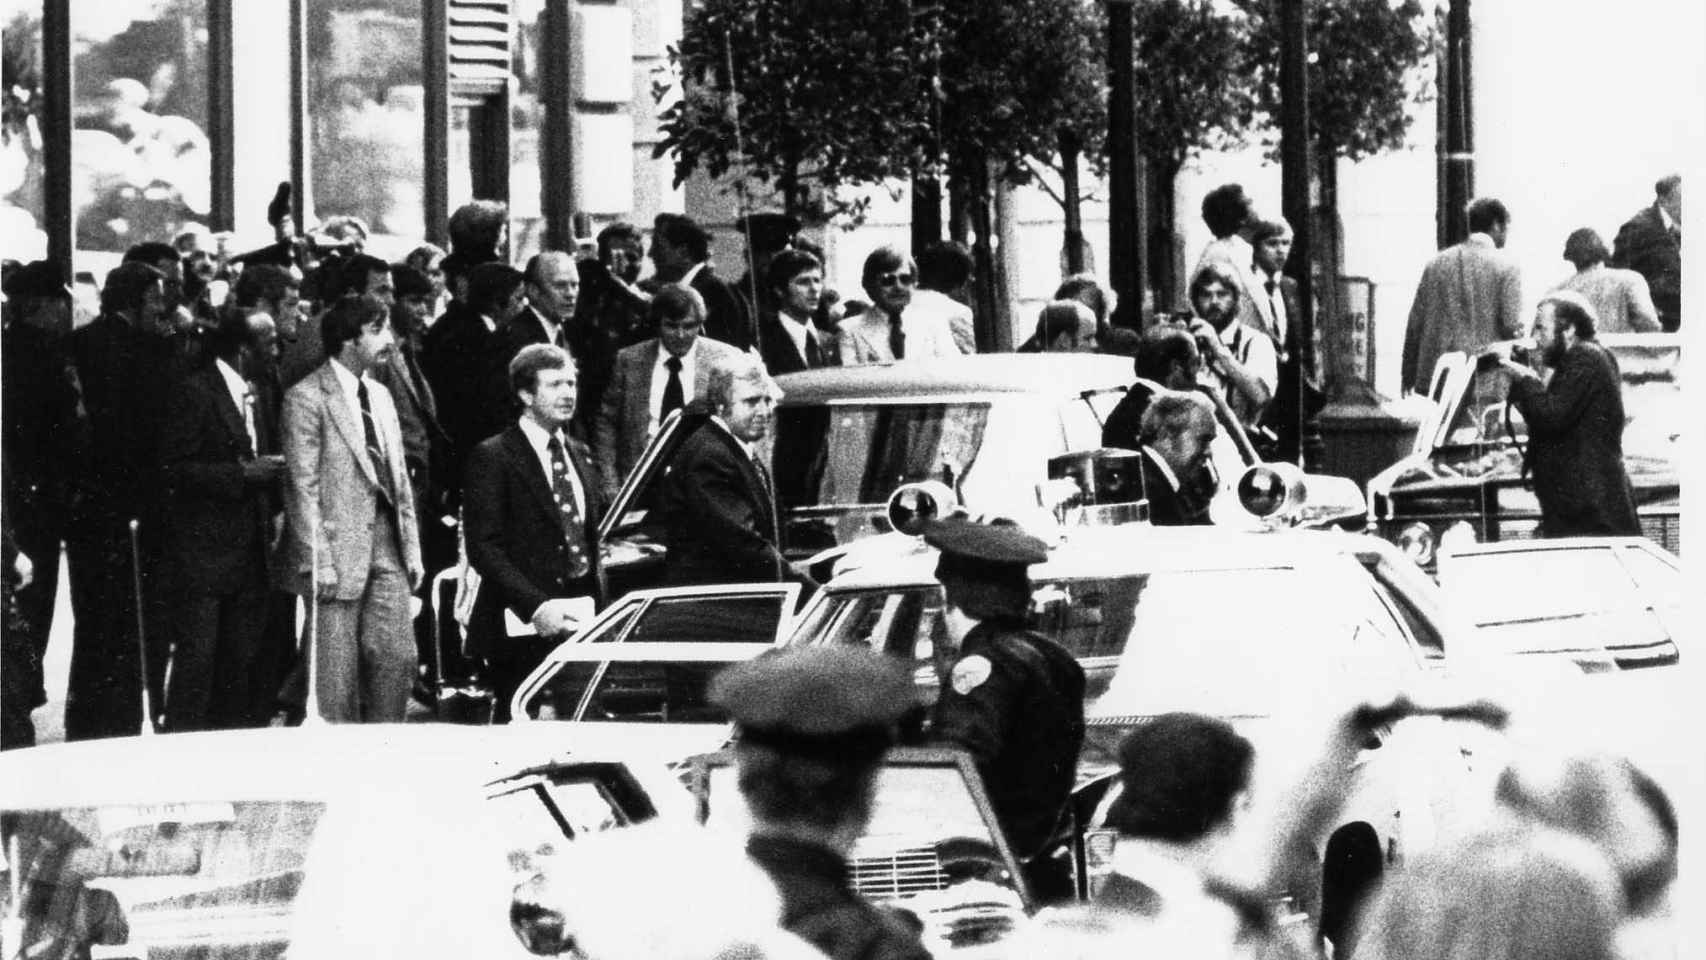 La comitiva que acompañaba al presidente Ford, momentos antes del intento de asesinato.